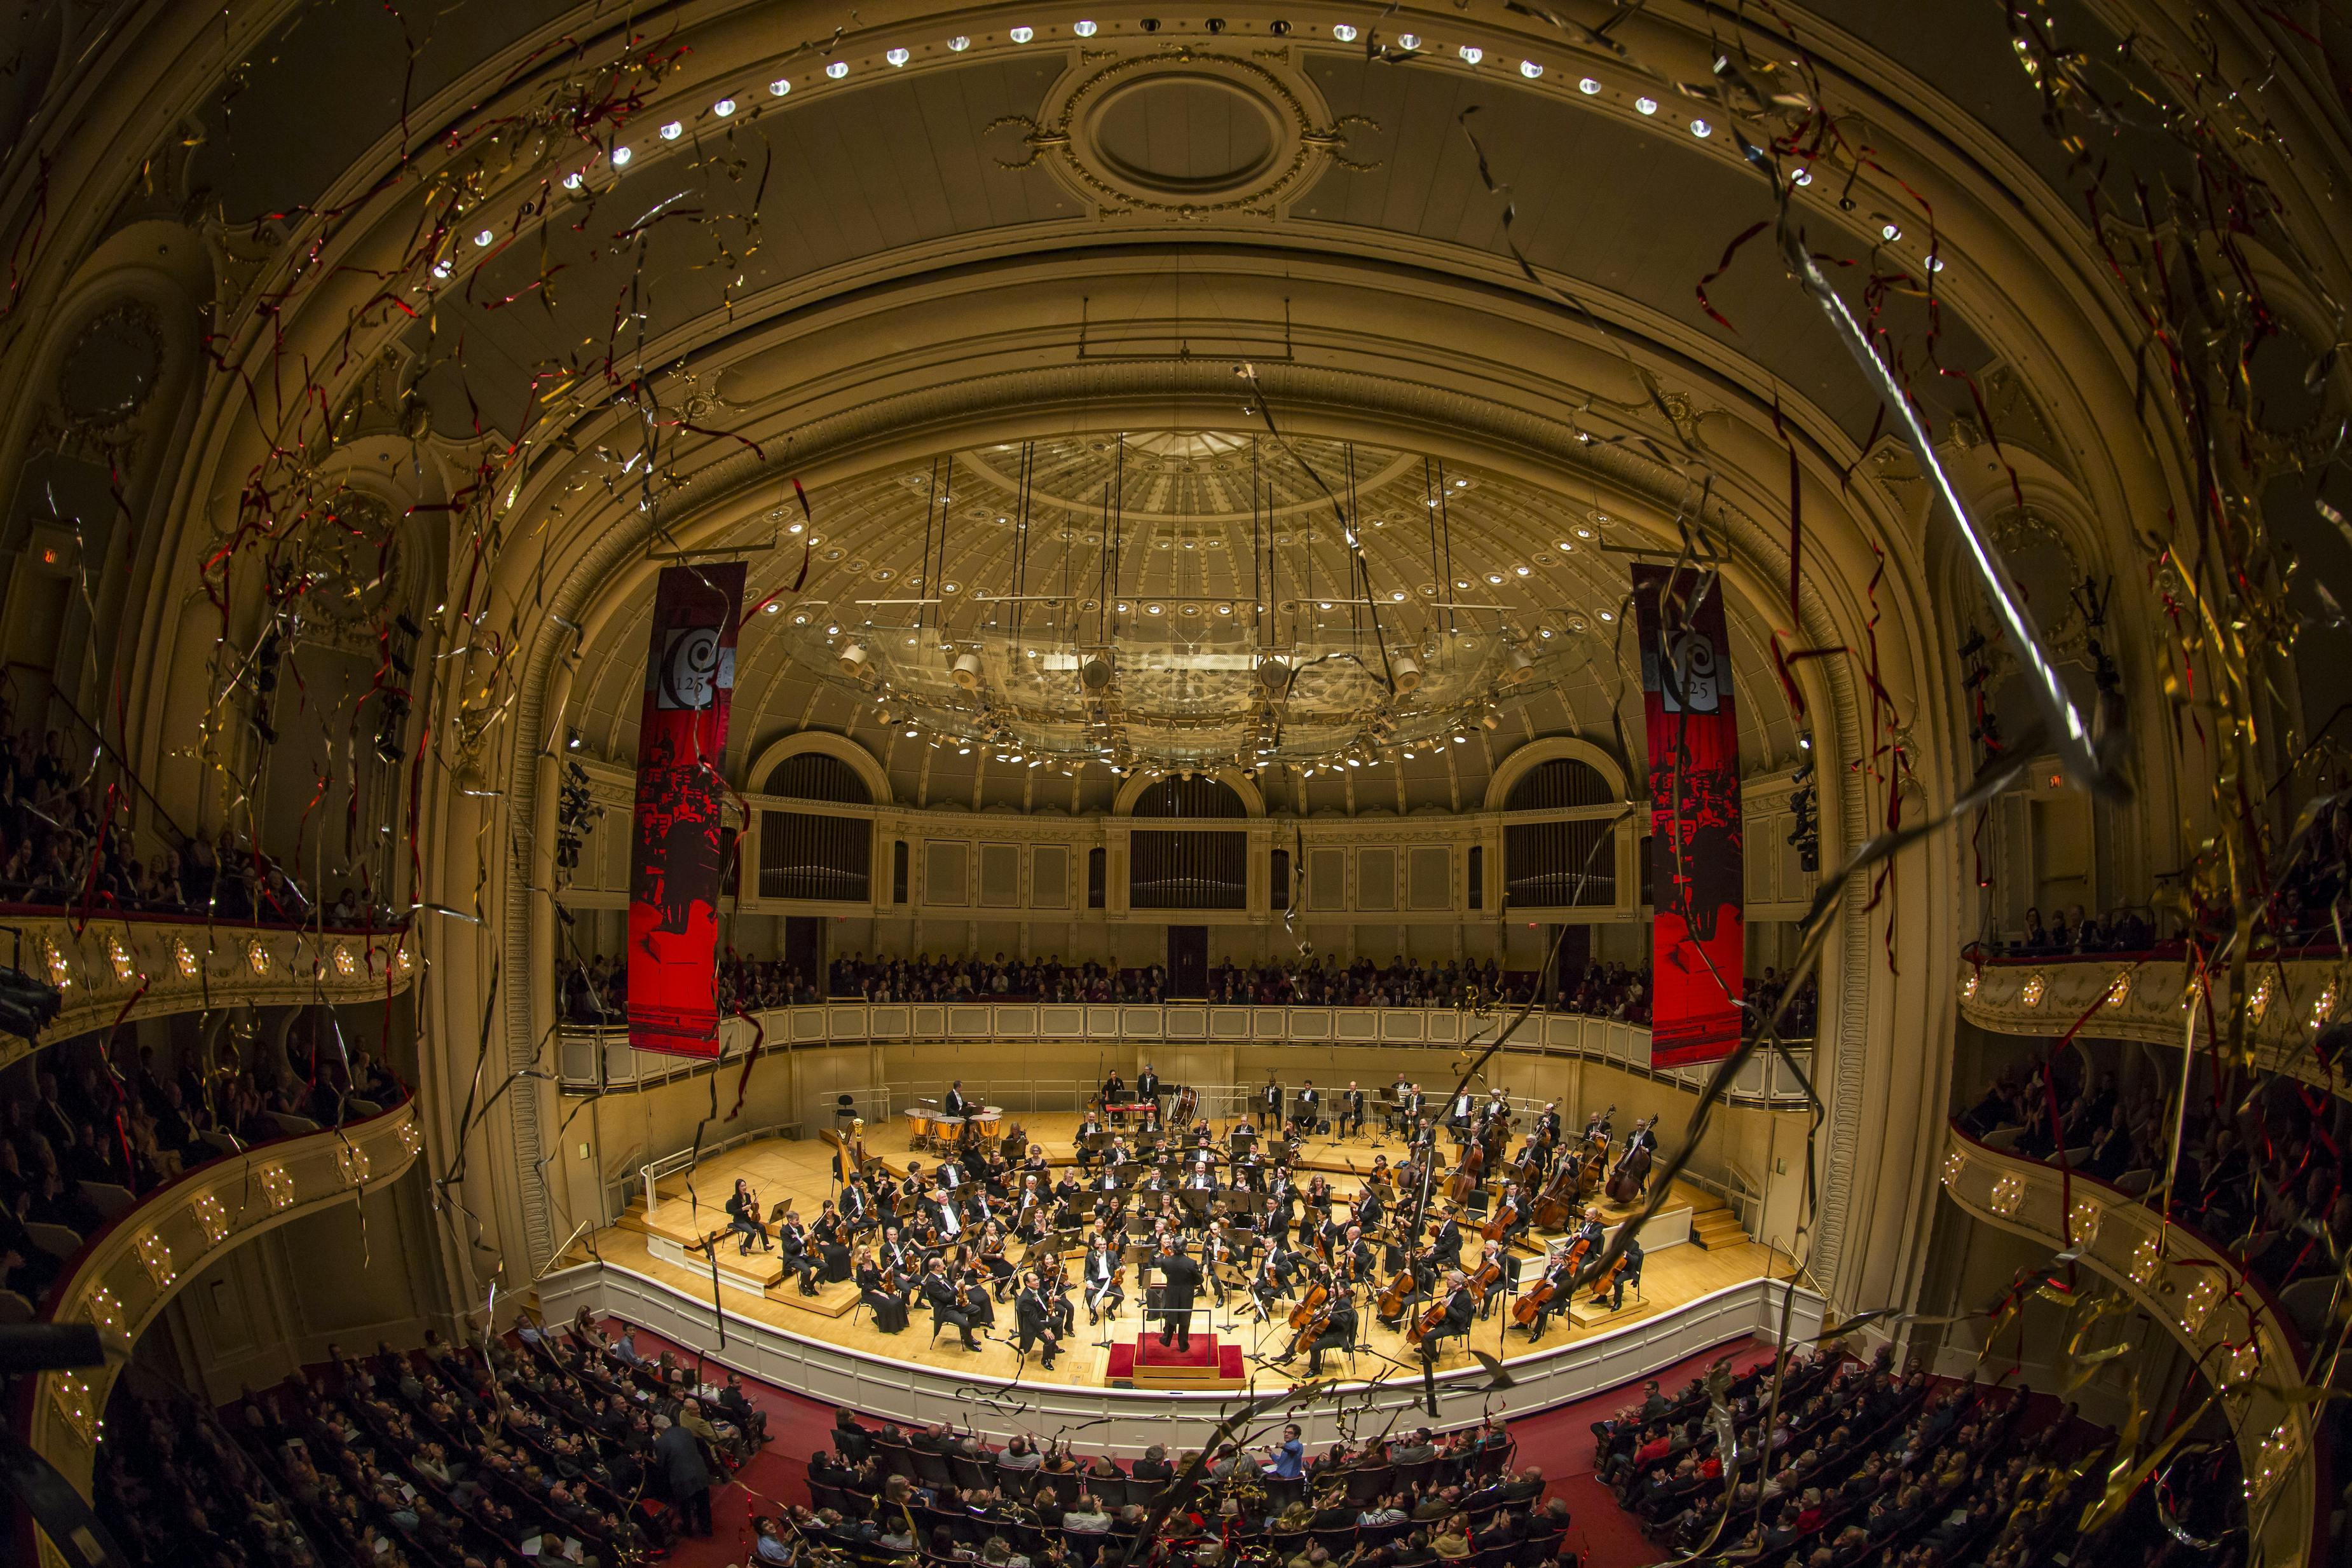 Chicago Symphony Center Chicago Venue All Events 86 photos on